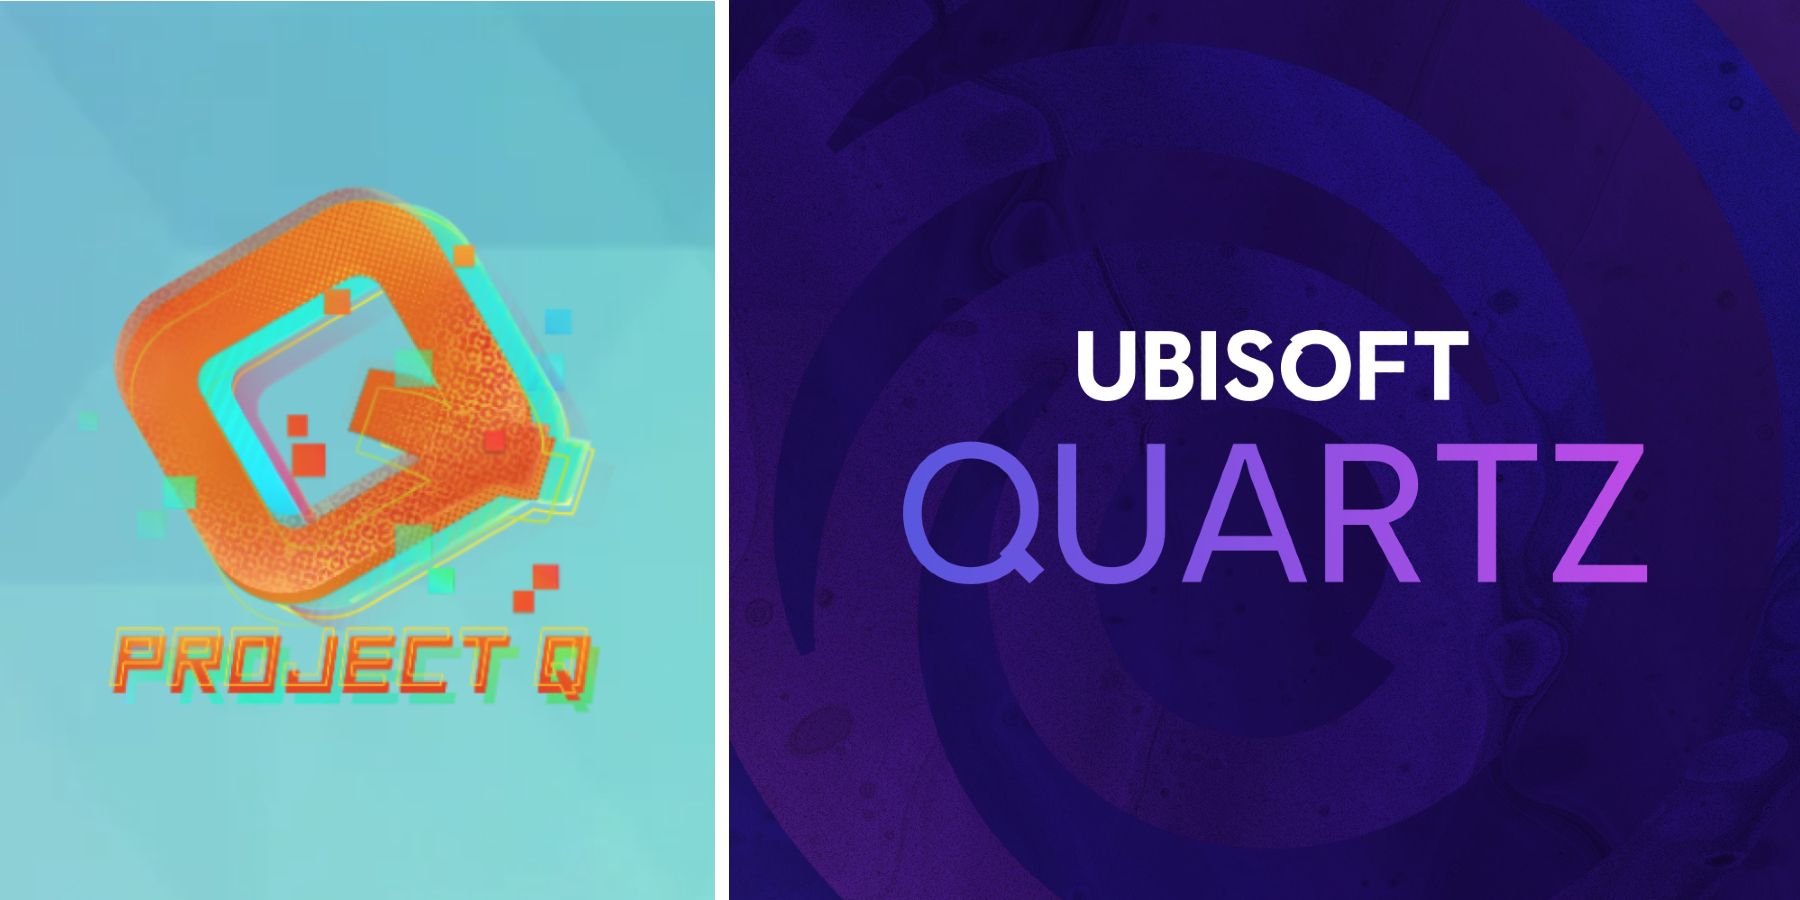 Ubisoft Project Q Ubisoft Quartz NFT